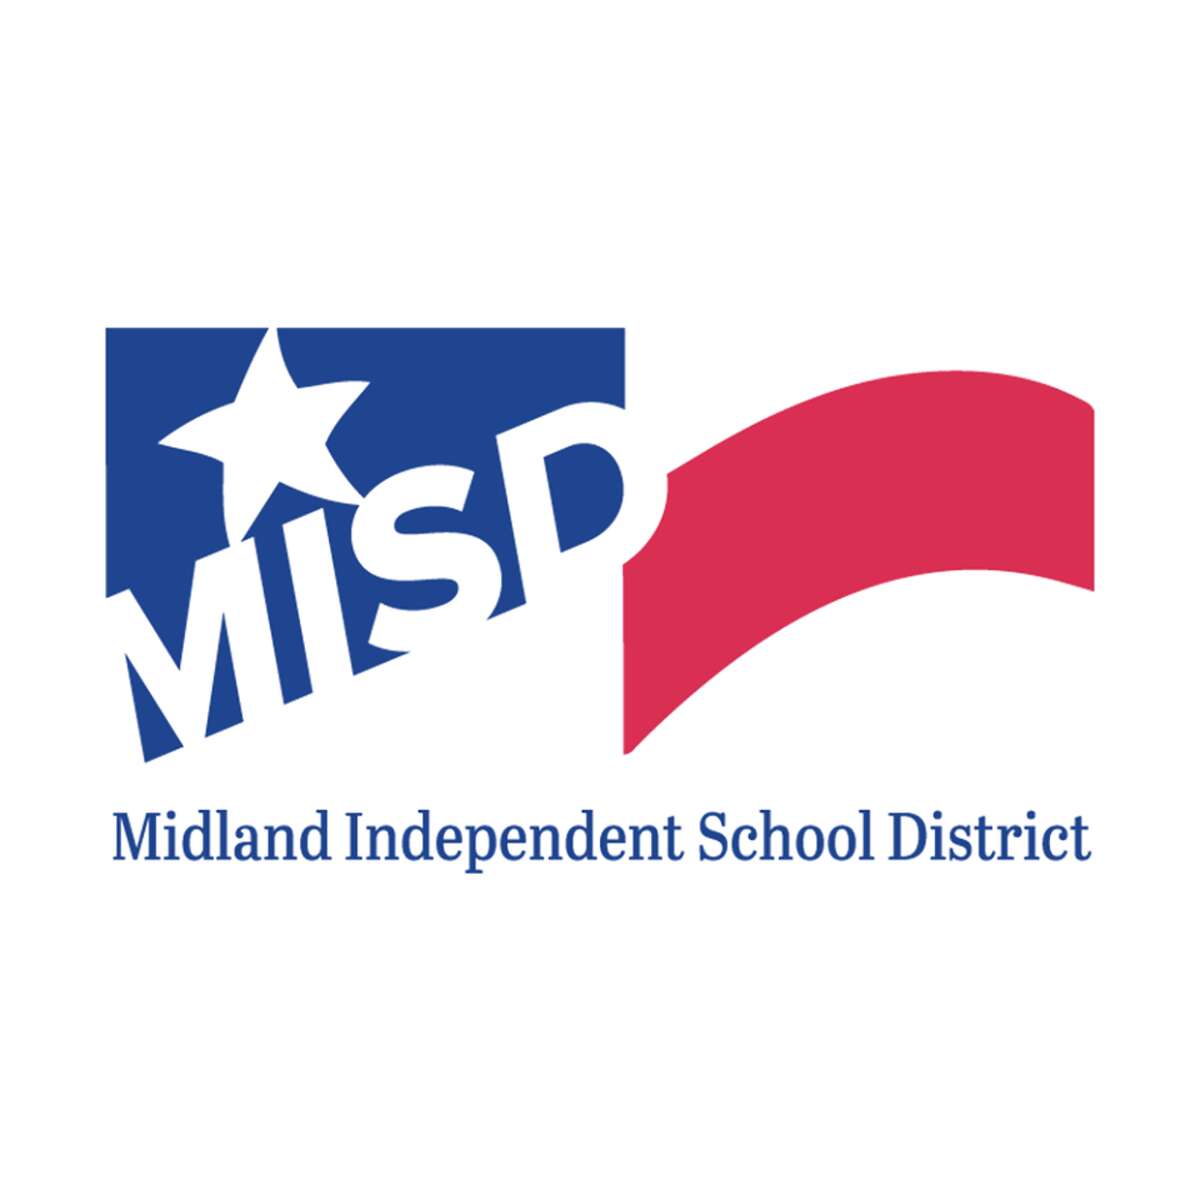 Updated MISD logo